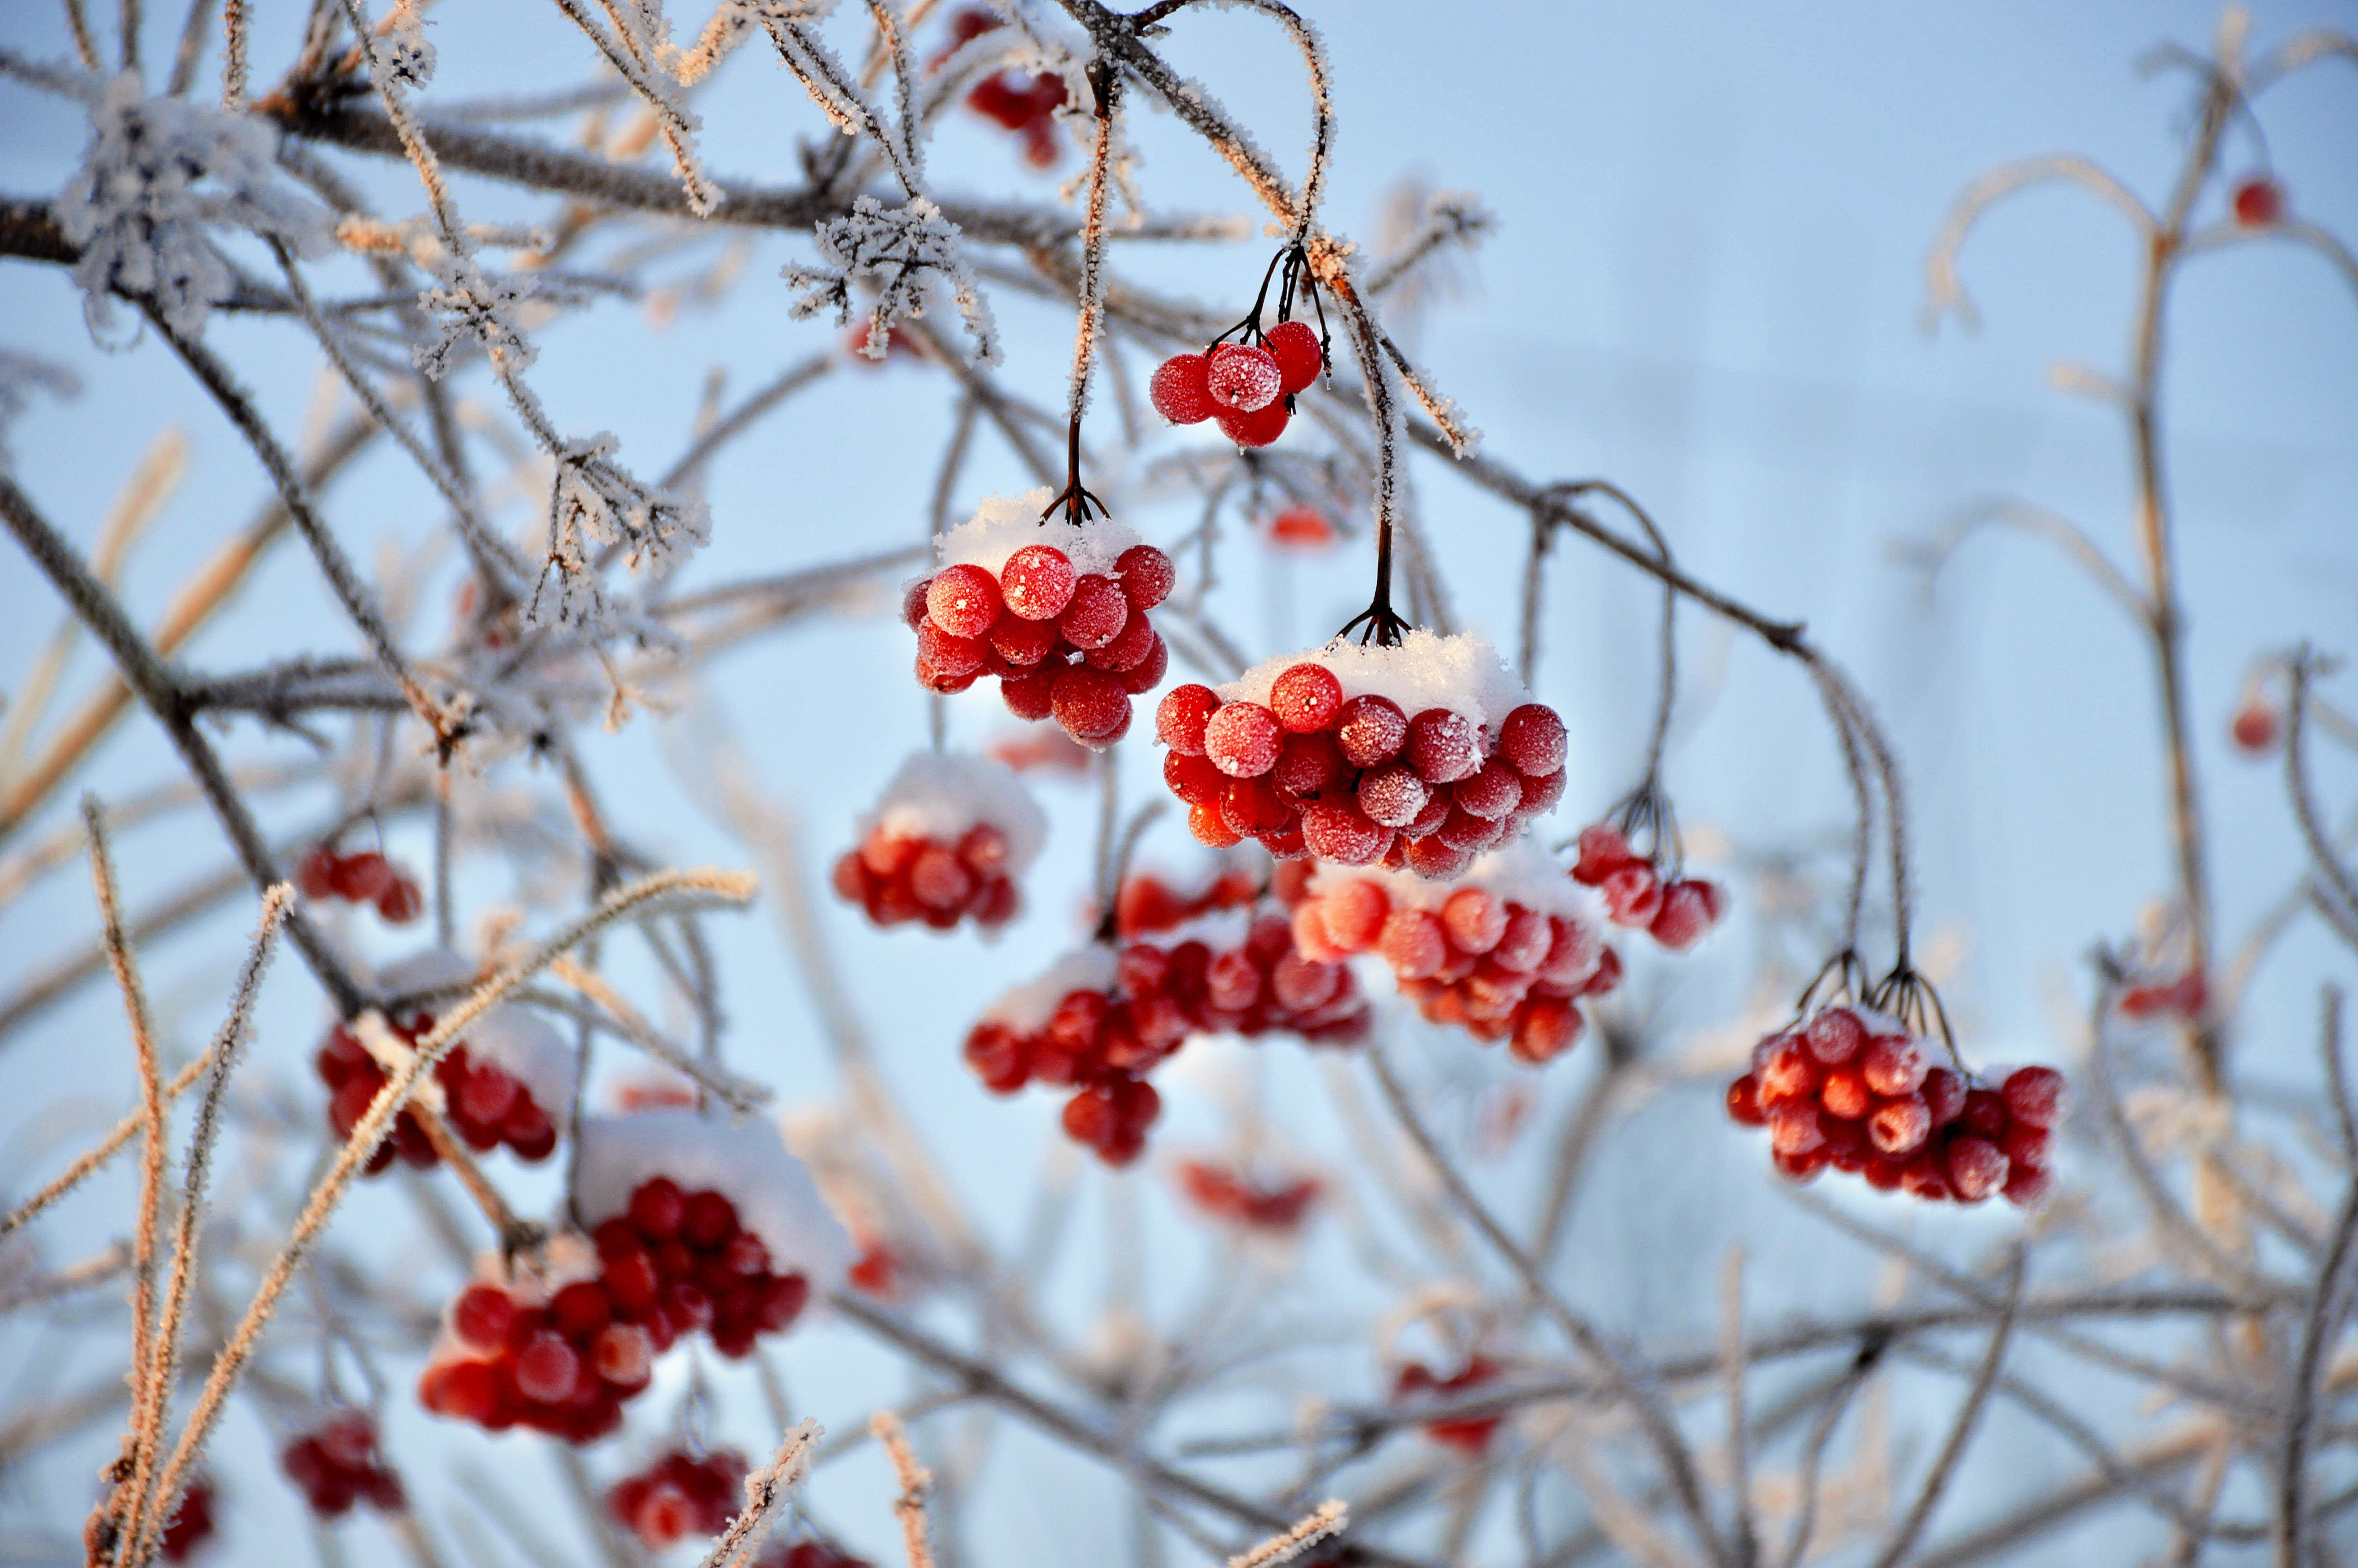 Cranberrybush viburnum is beautiful in winter landscapes. (Pixabay photo)